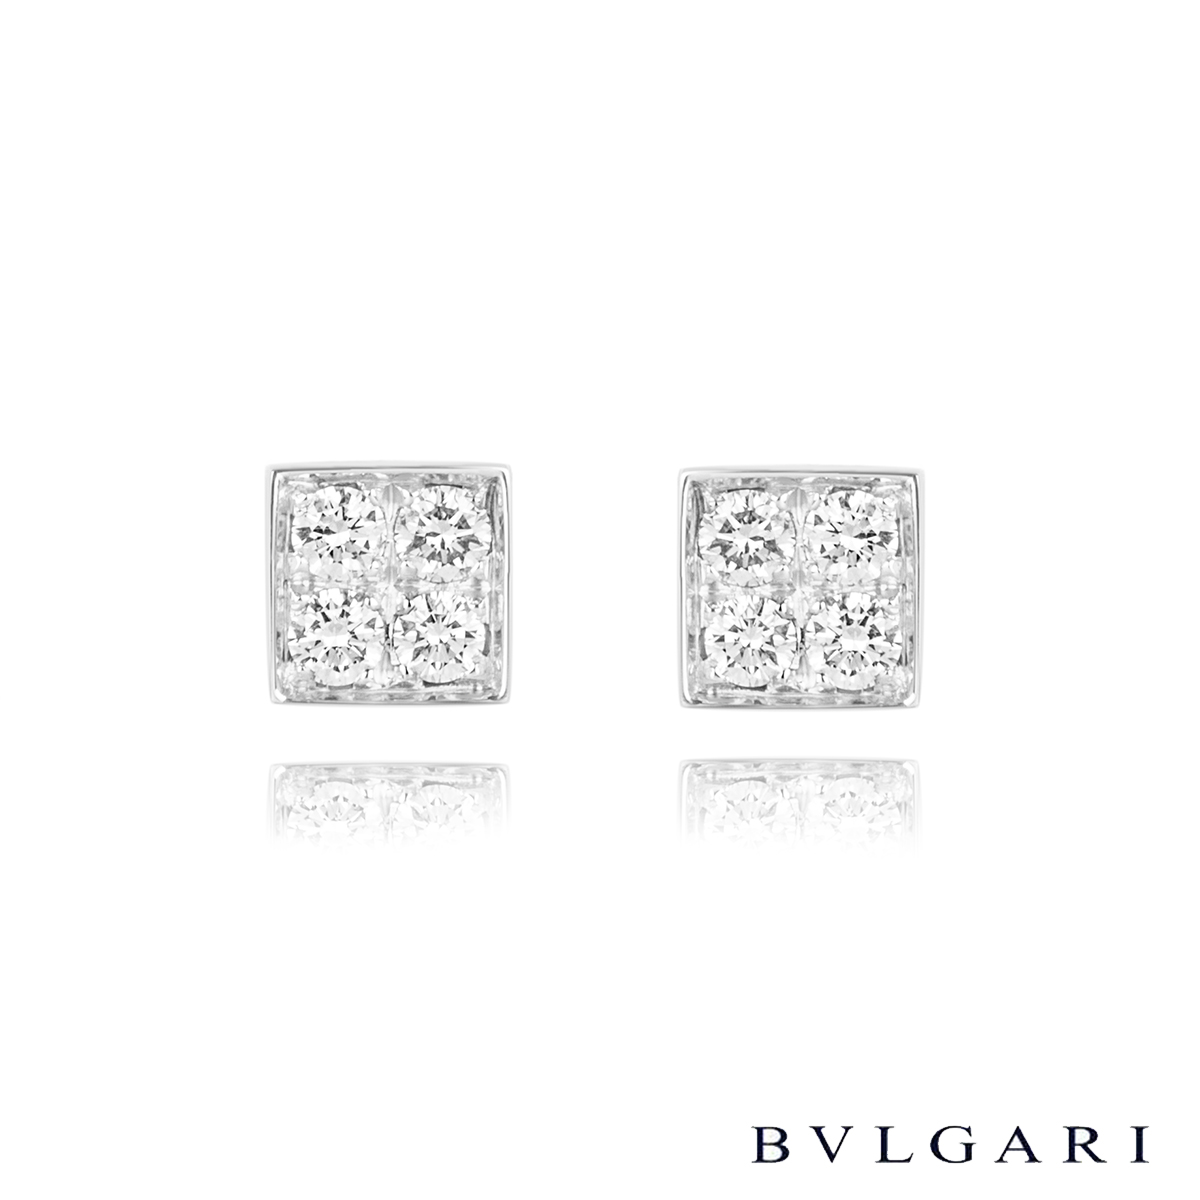 Bvlgari White Gold Diamond Lucea Earrings